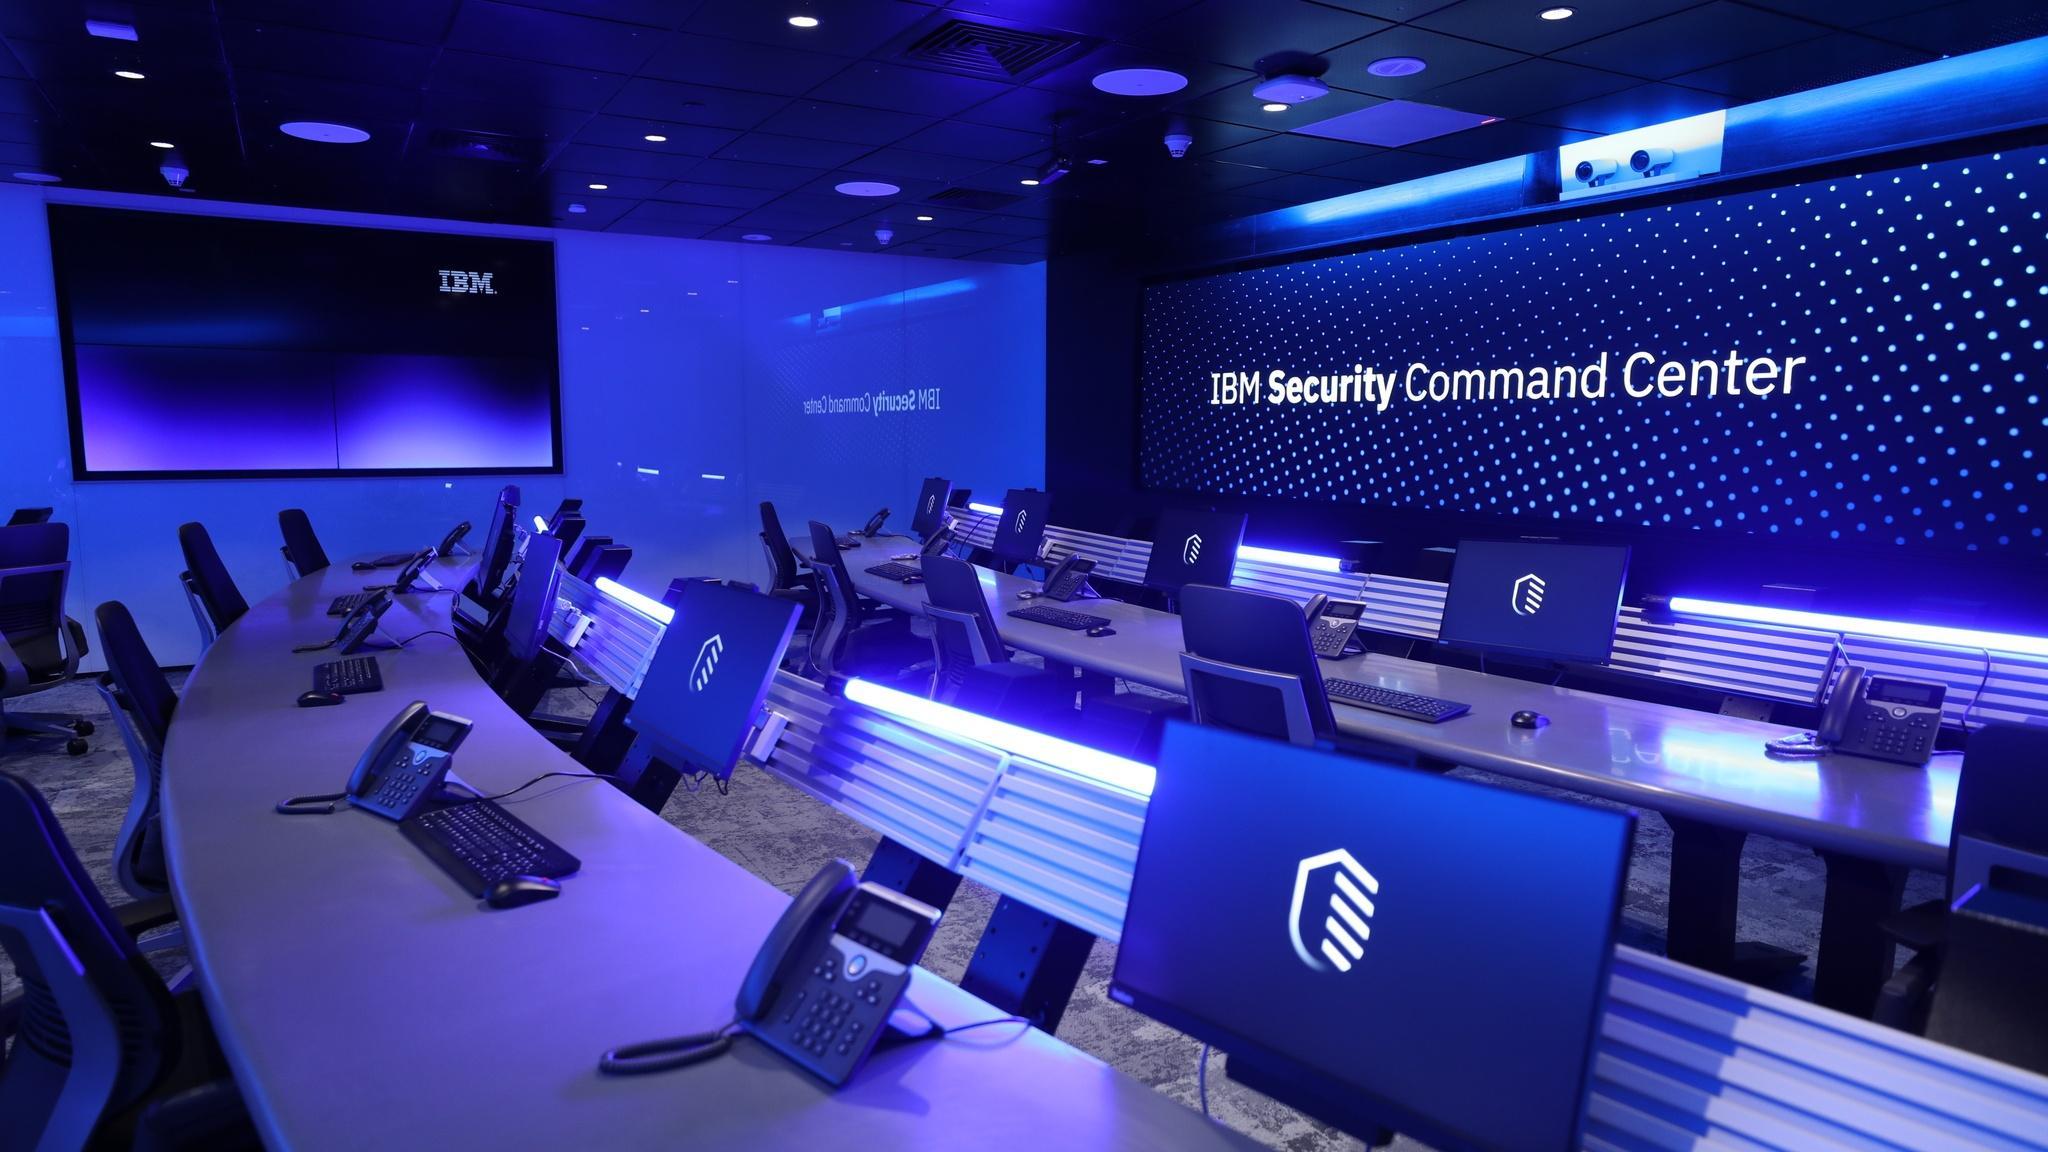 IBM unveiled new Cybersecurity Hub in Bengaluru to address cyberattack